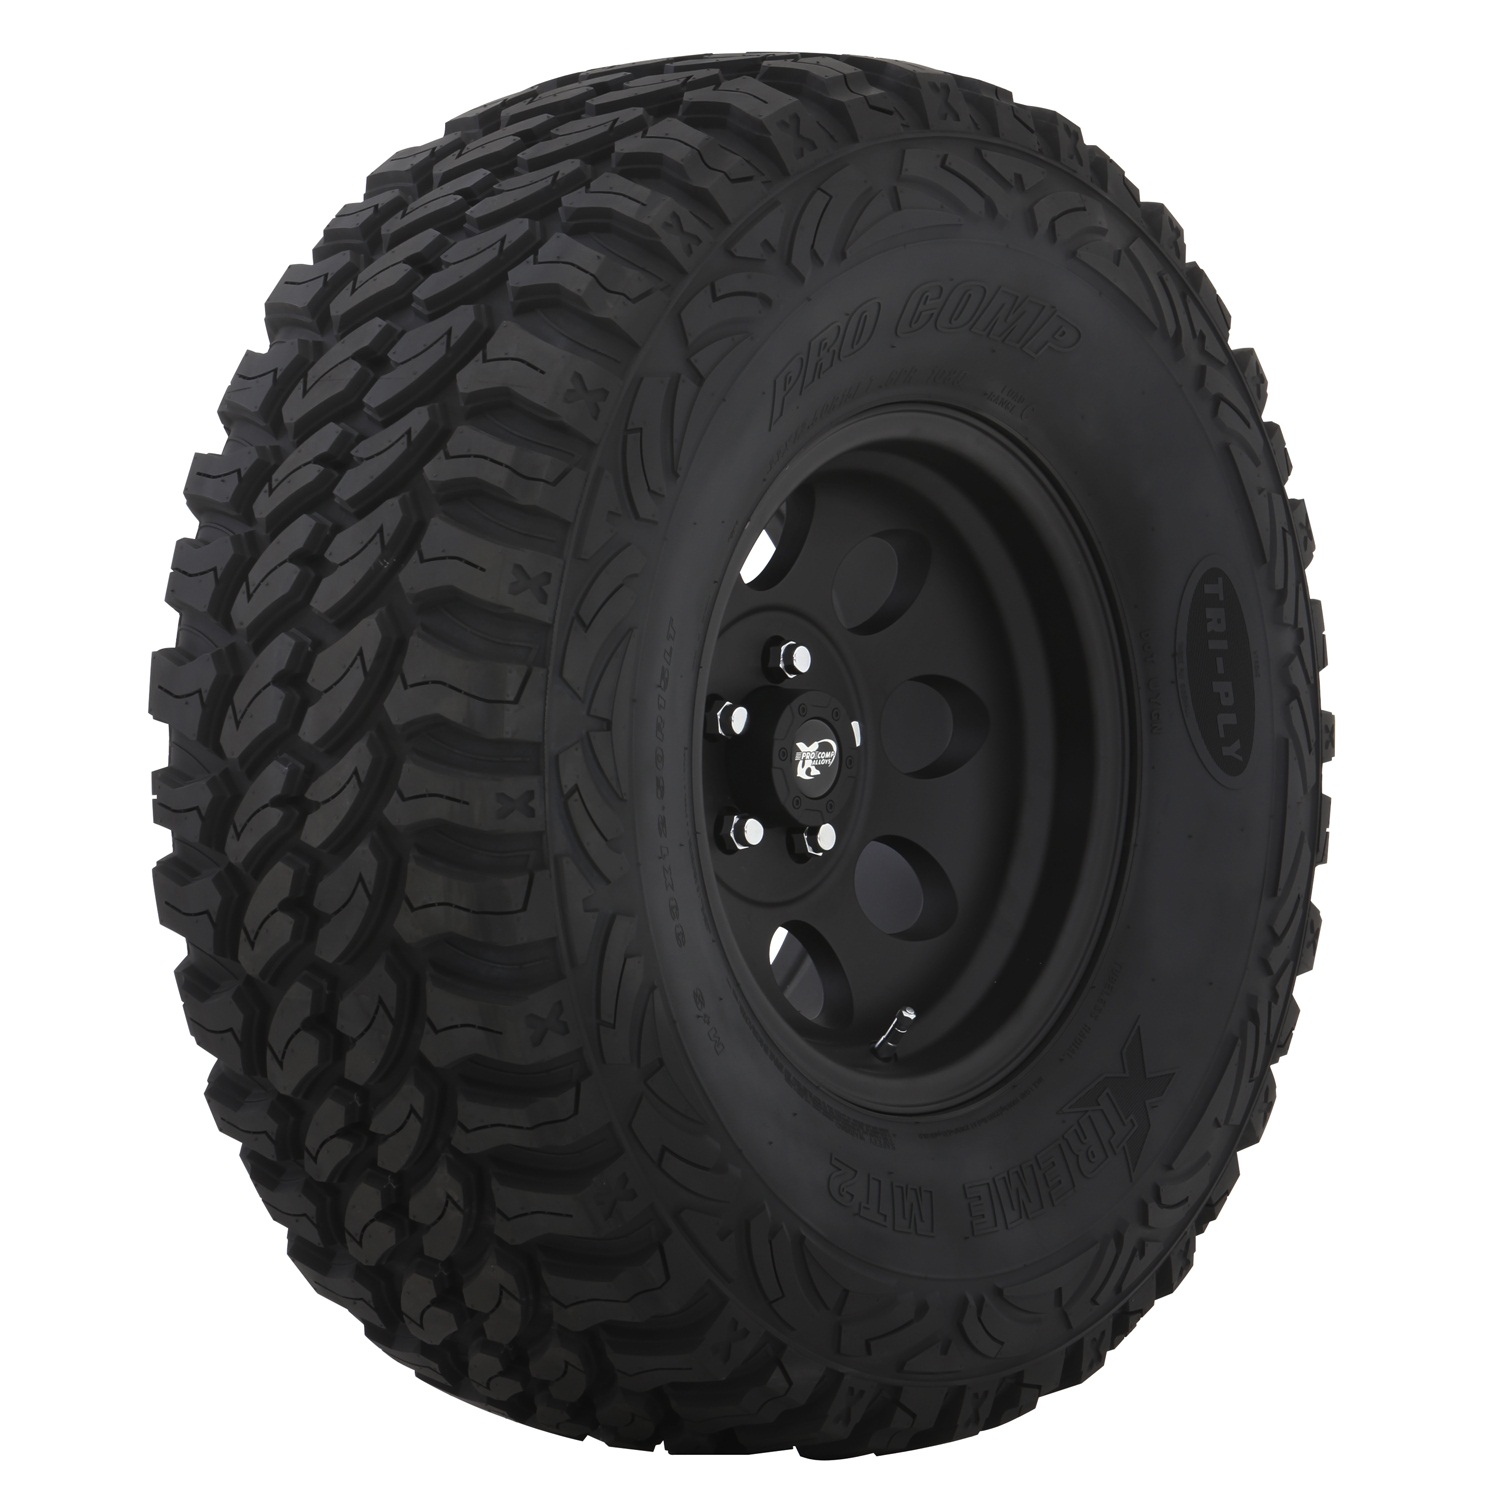 Pro Comp Tires Pro Comp Tires 77285 Pro Comp Xtreme Mud Terrain 2; Tire